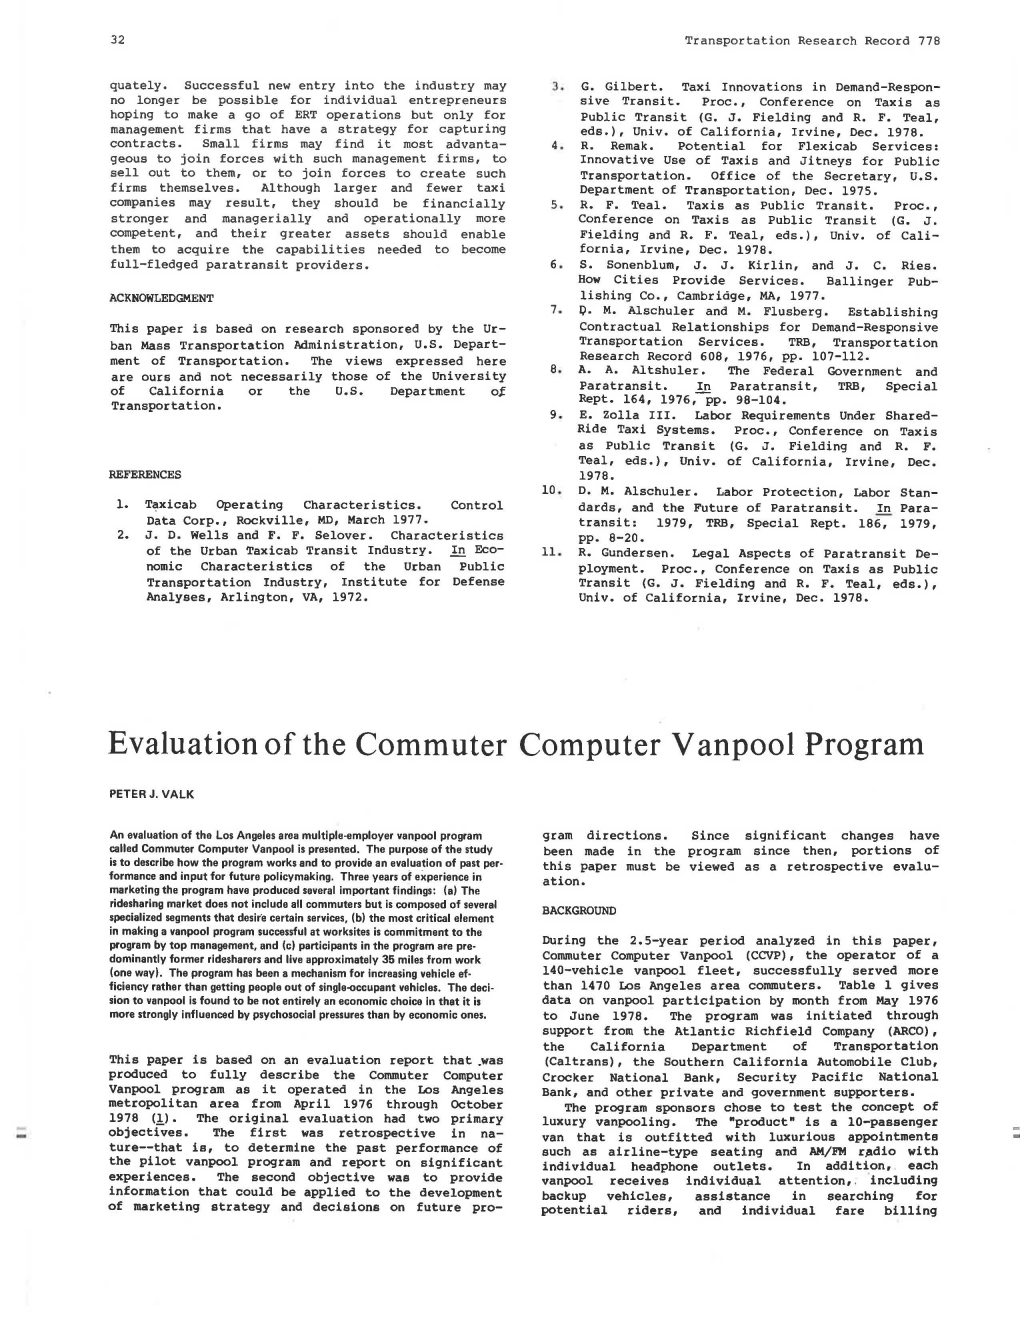 Evaluation of the Commuter Computer Vanpool Program